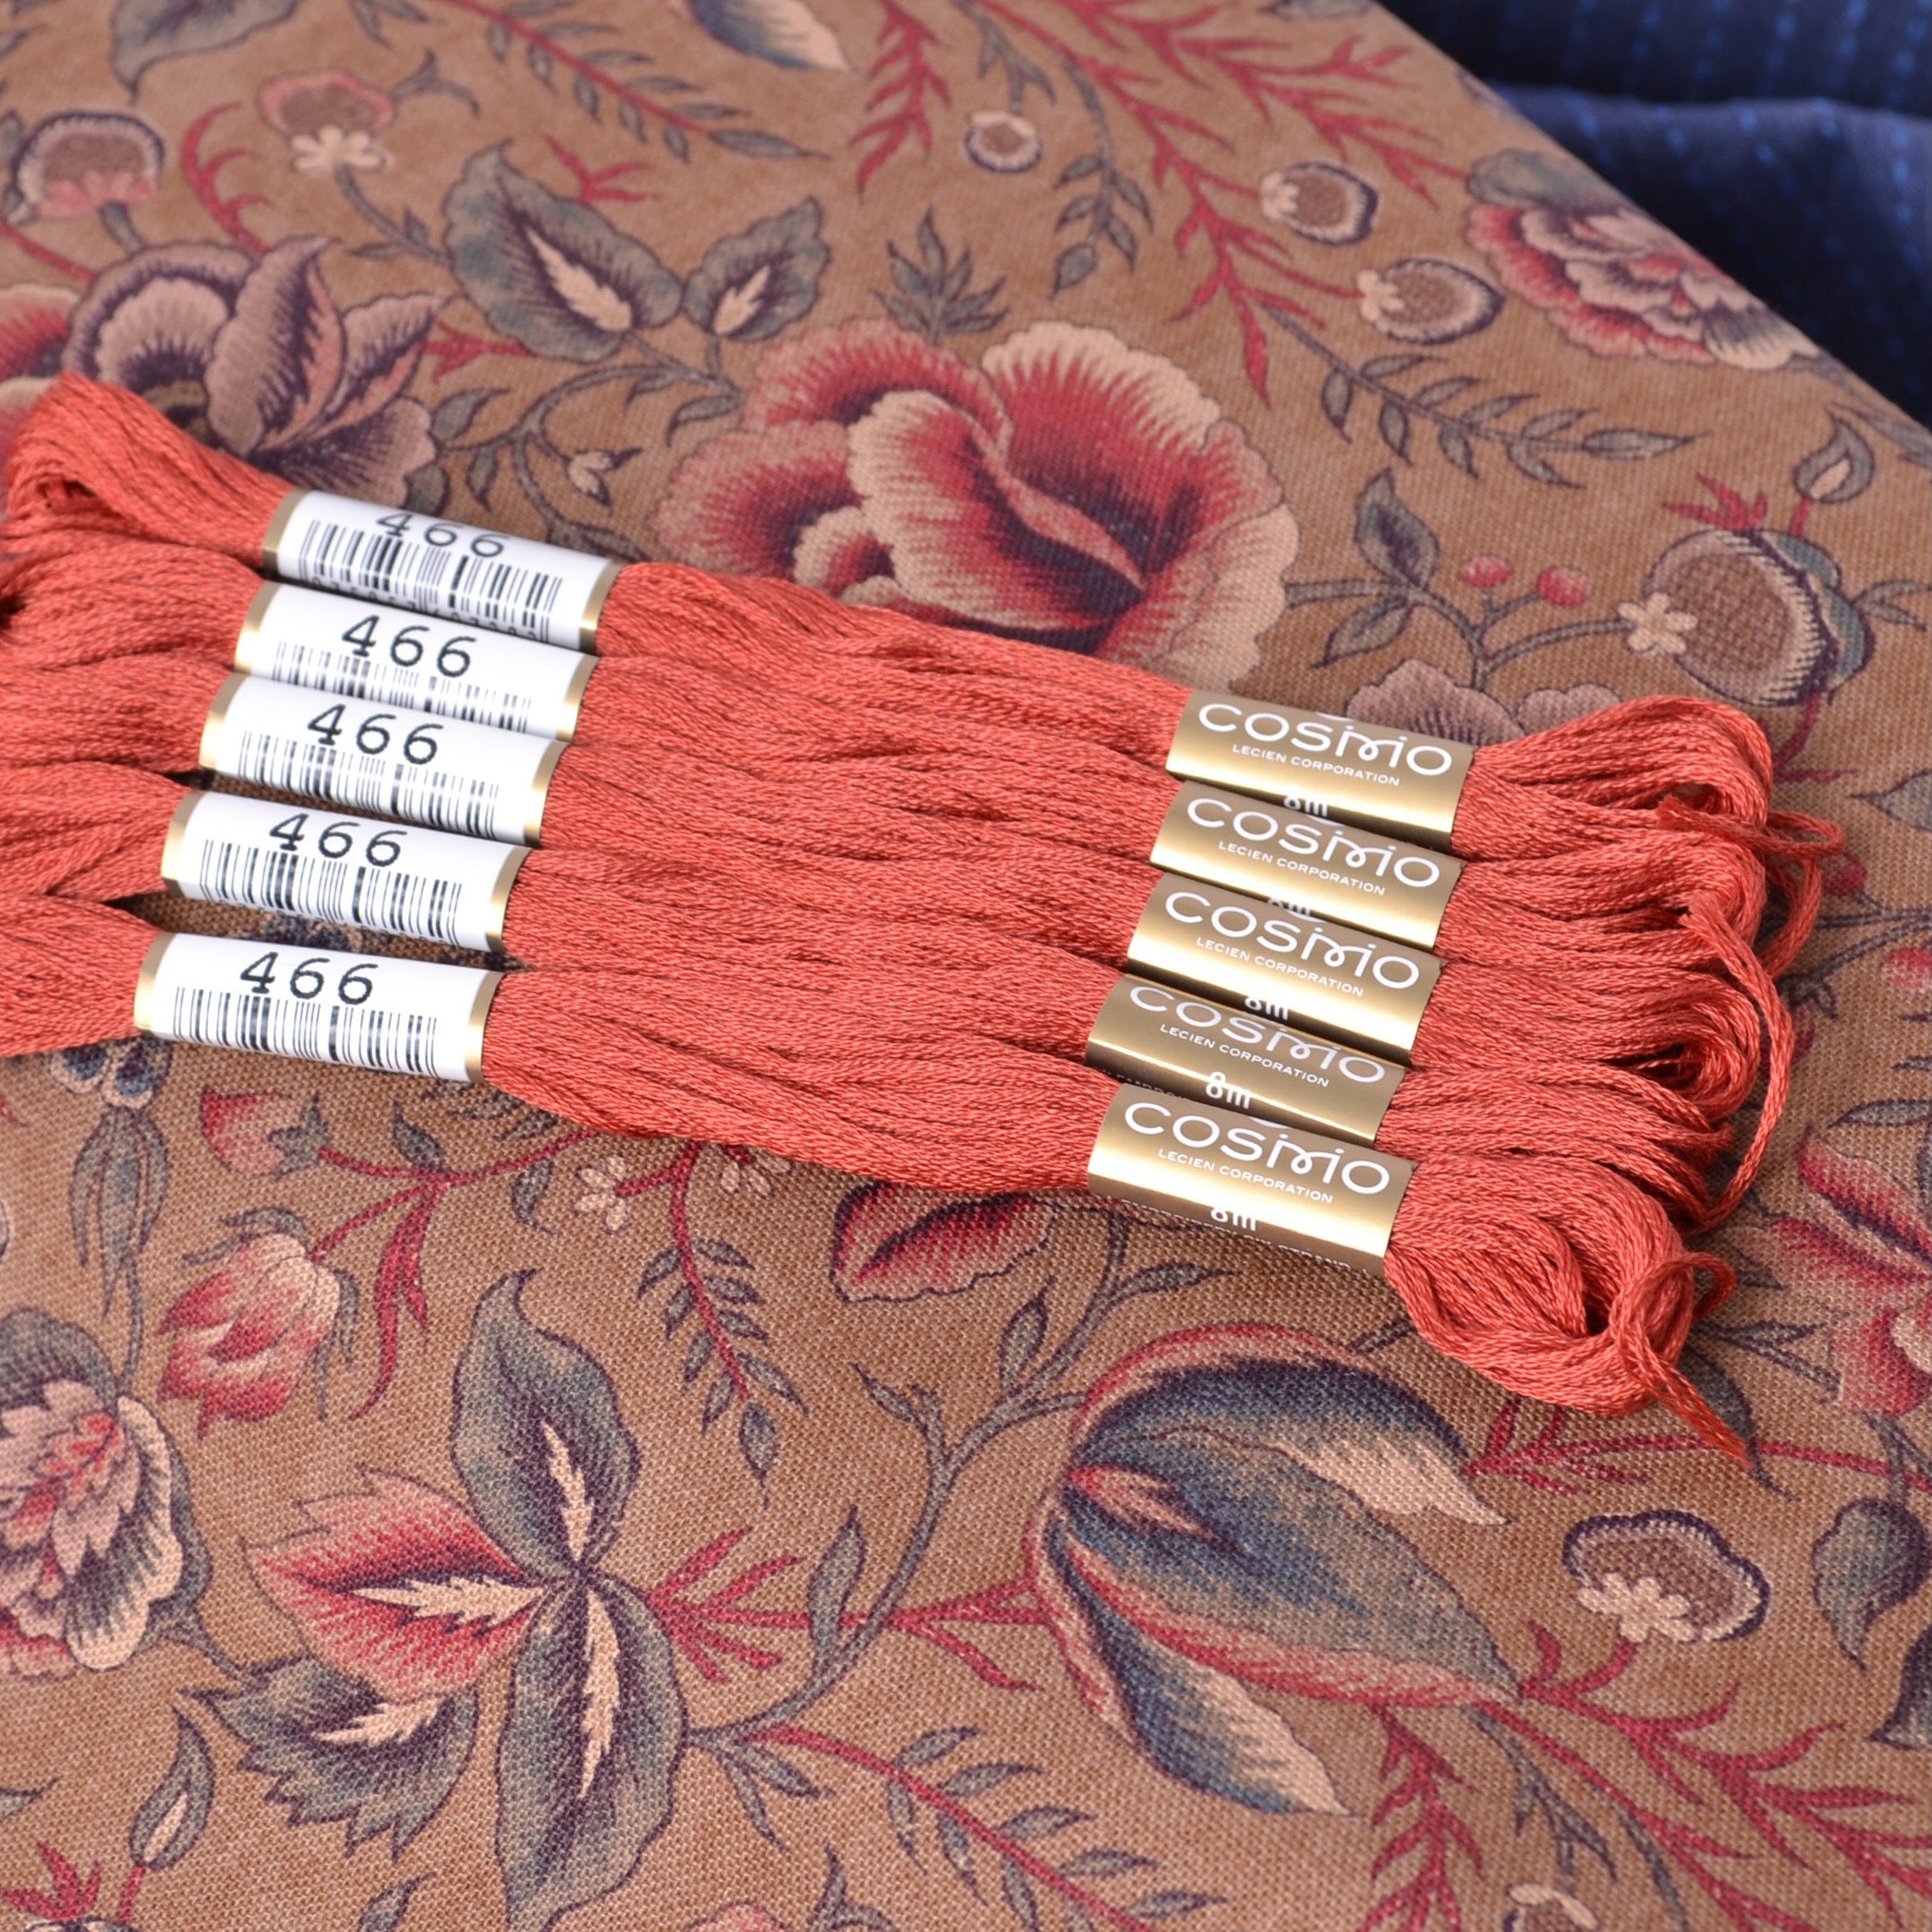 Shuanshuo Sewing Machine thread, Hand stiching ,Sew thread ,Pachwrok work Cotton  Thread ,DIY Sewing tools 10pcs/